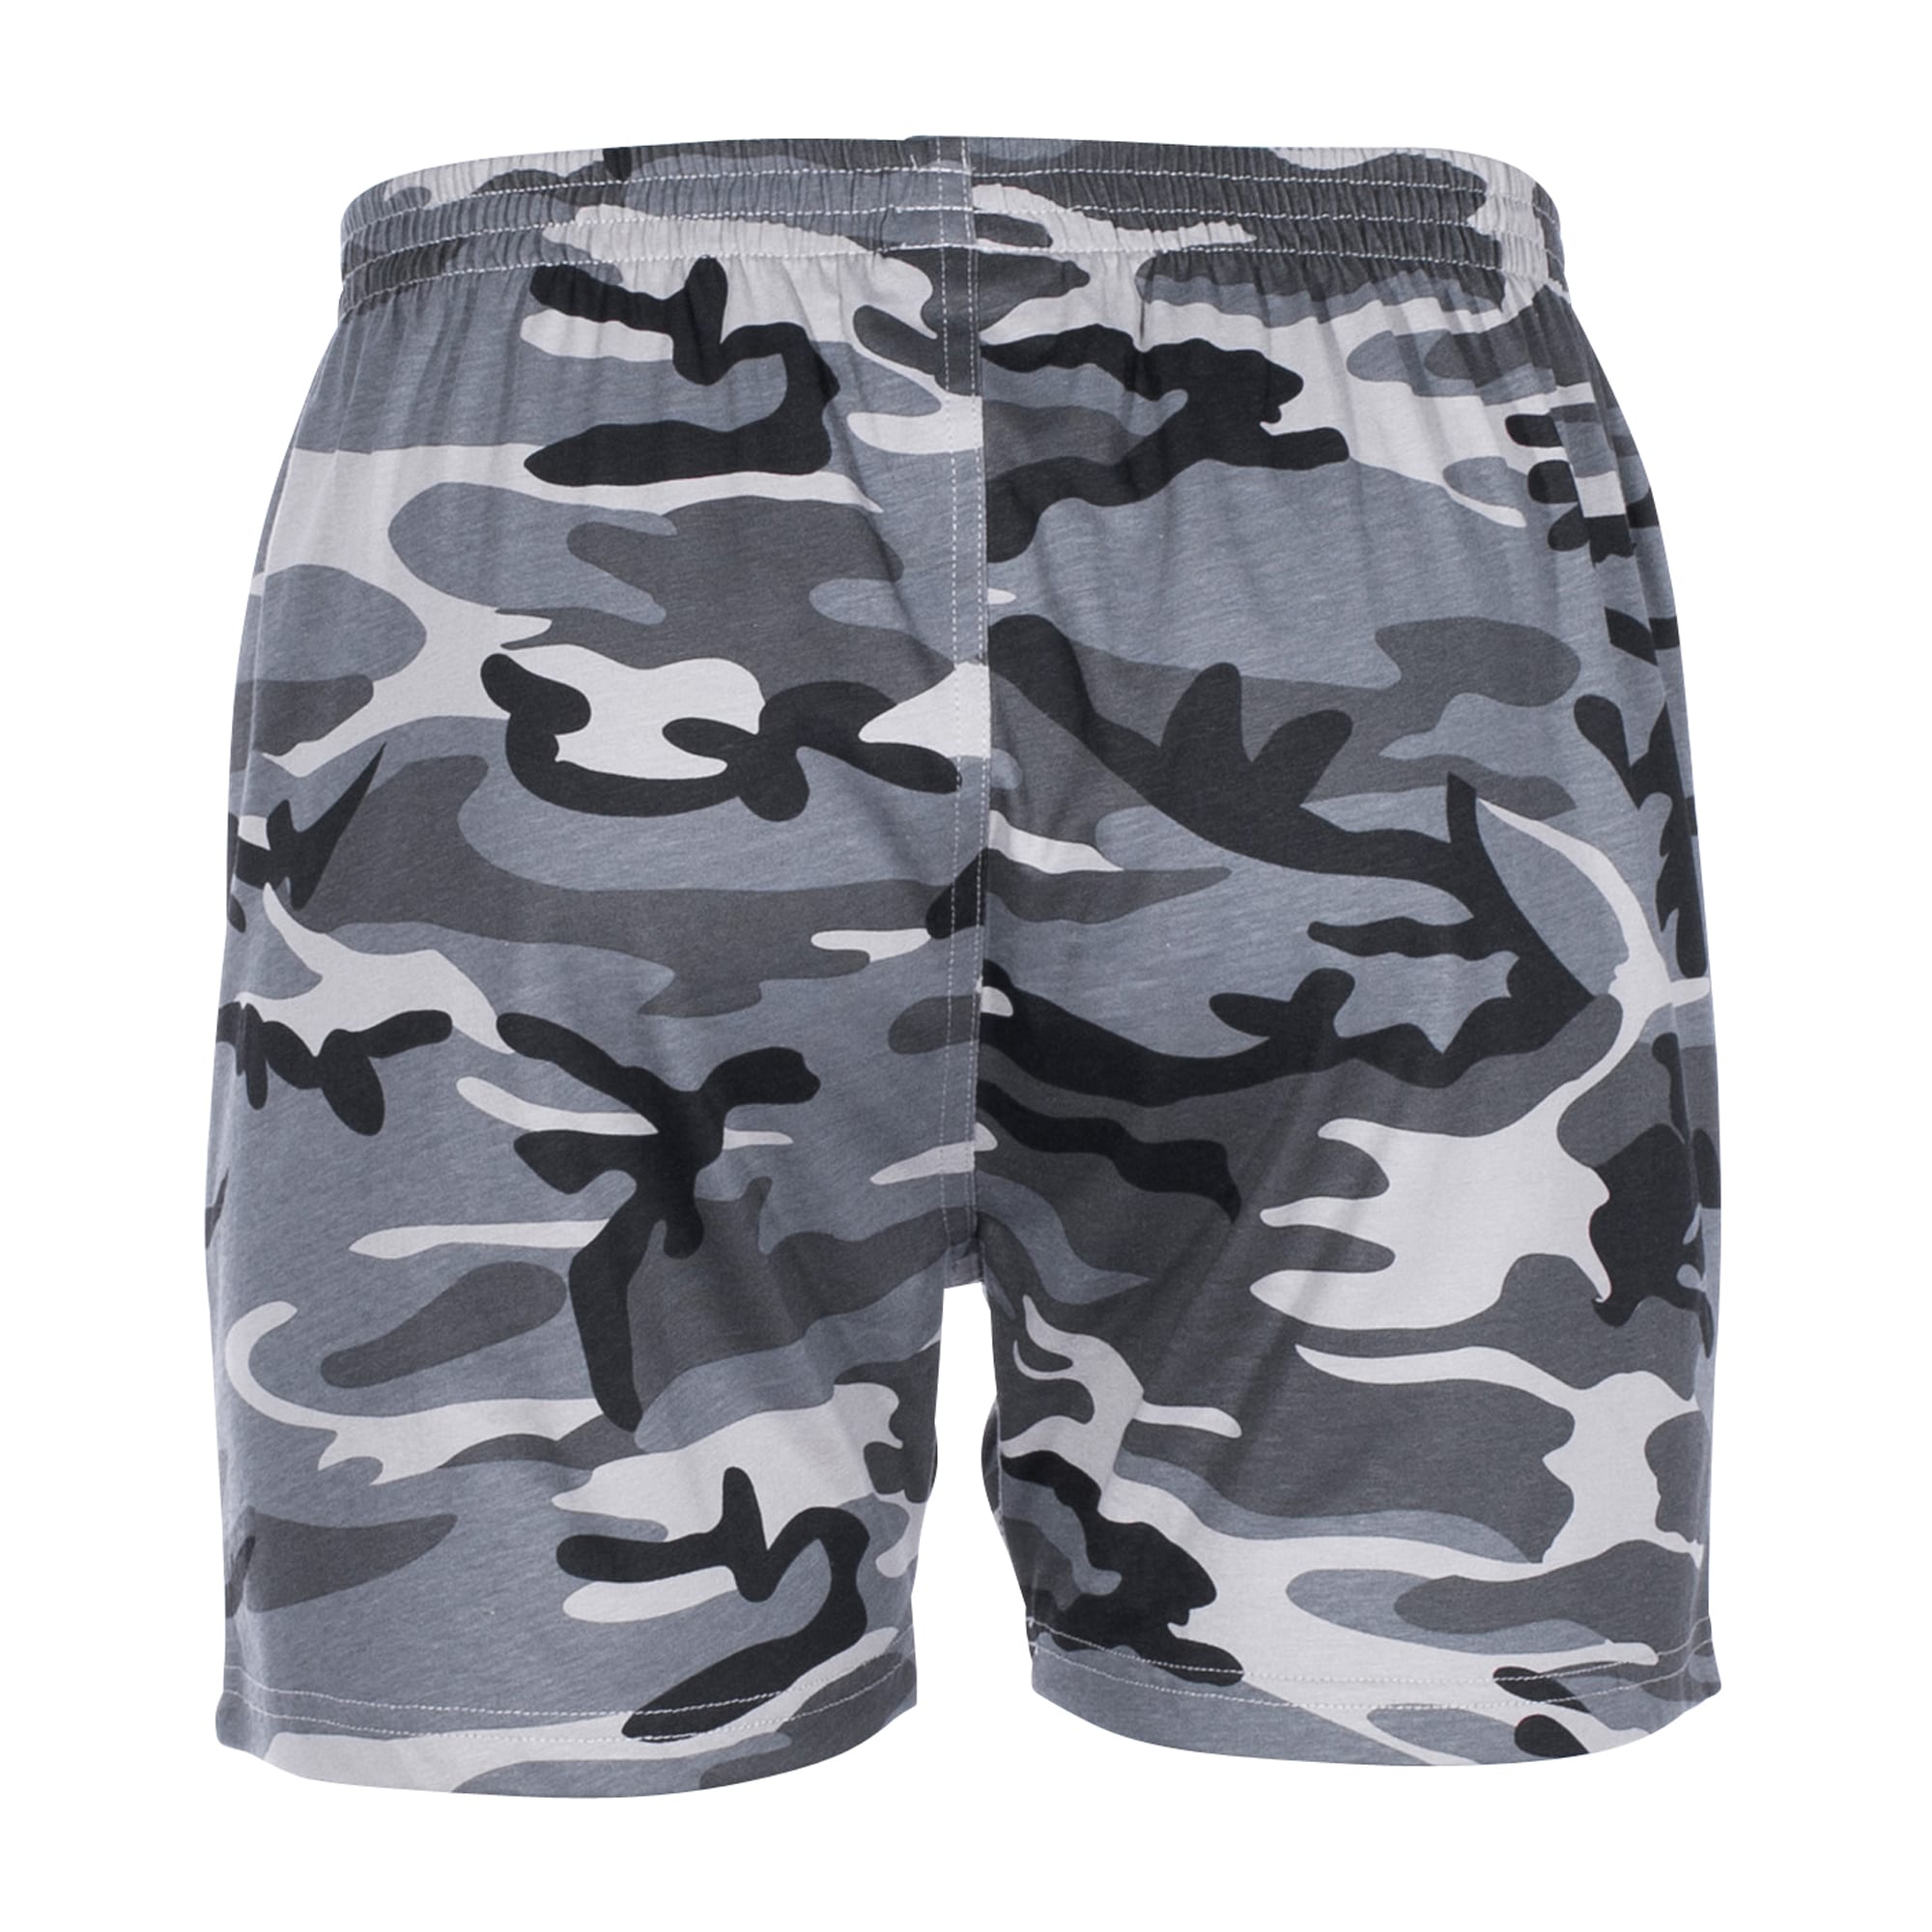 Purchase the Mil-Tec Boxer Shorts dark camo by ASMC